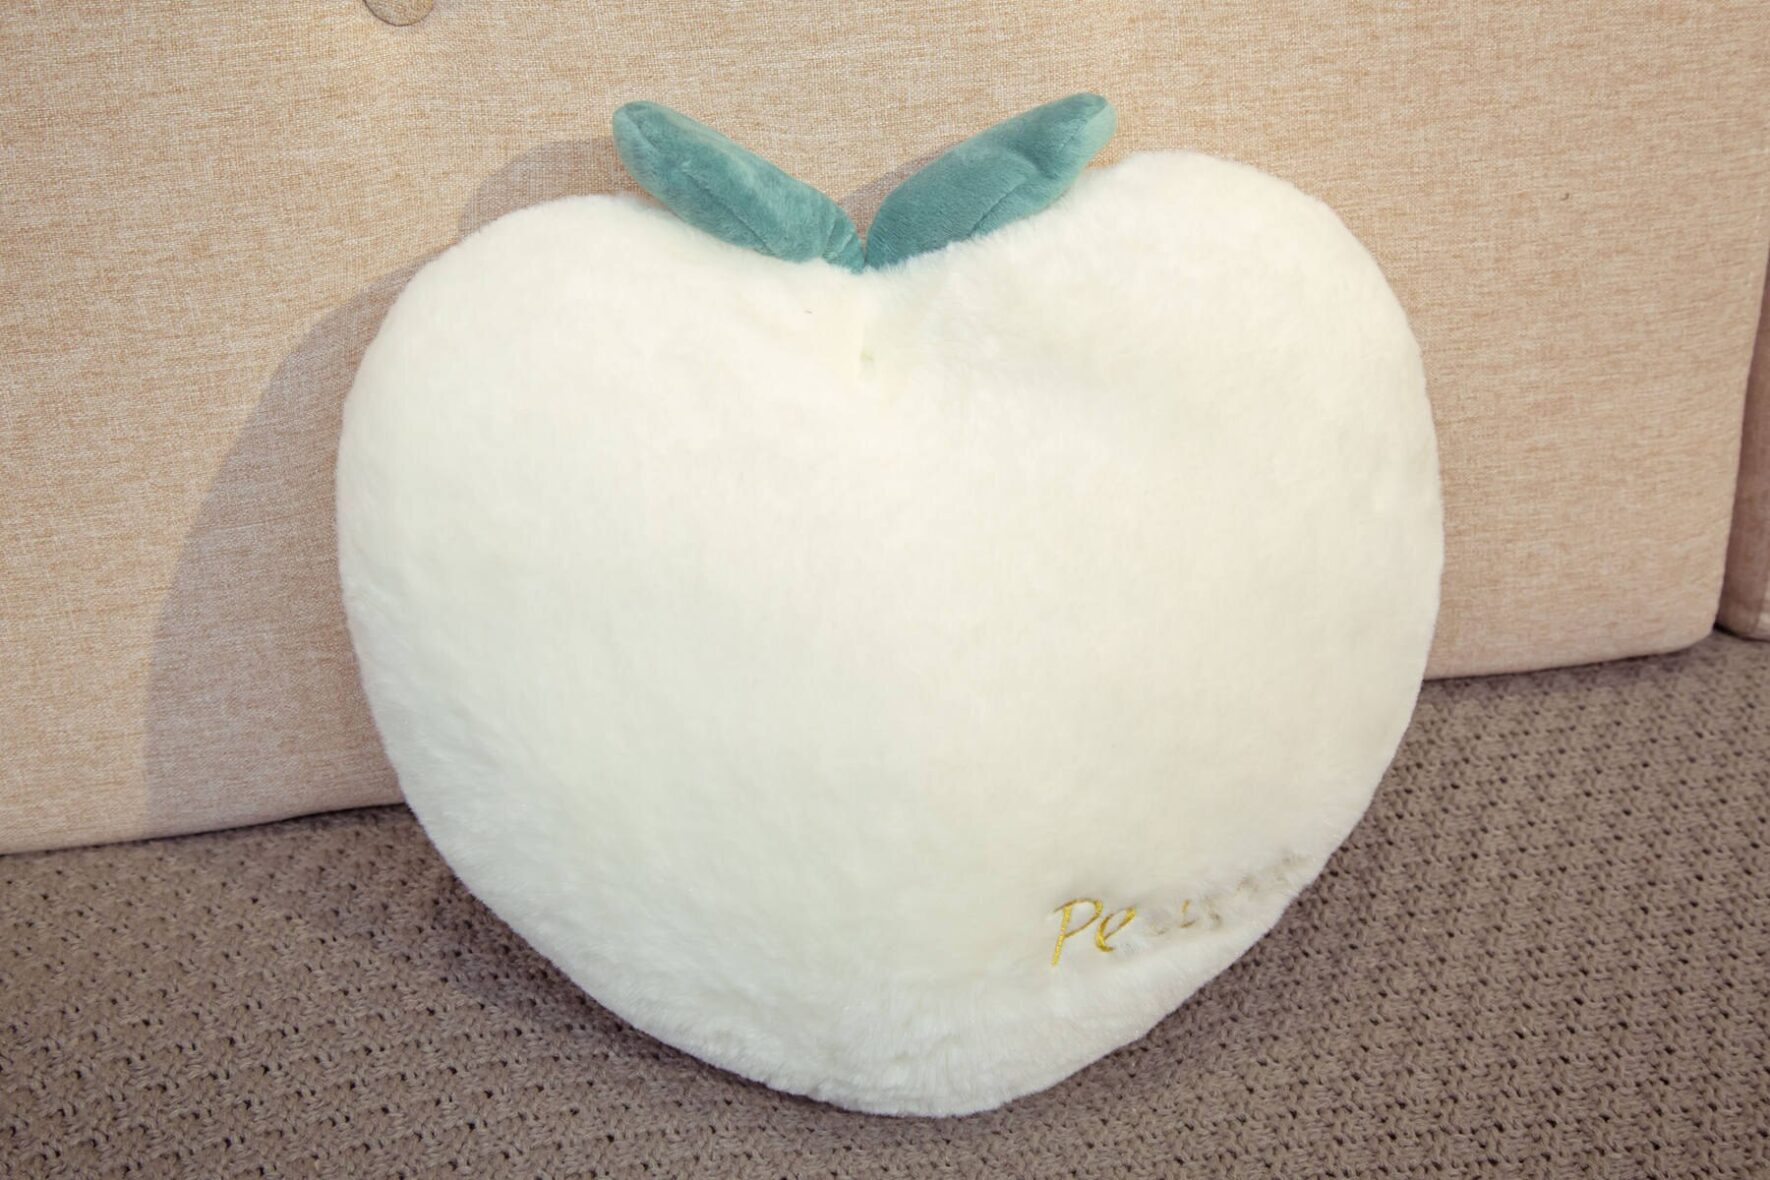 Peach Shaped Soft Stuffed Plush White Pillow